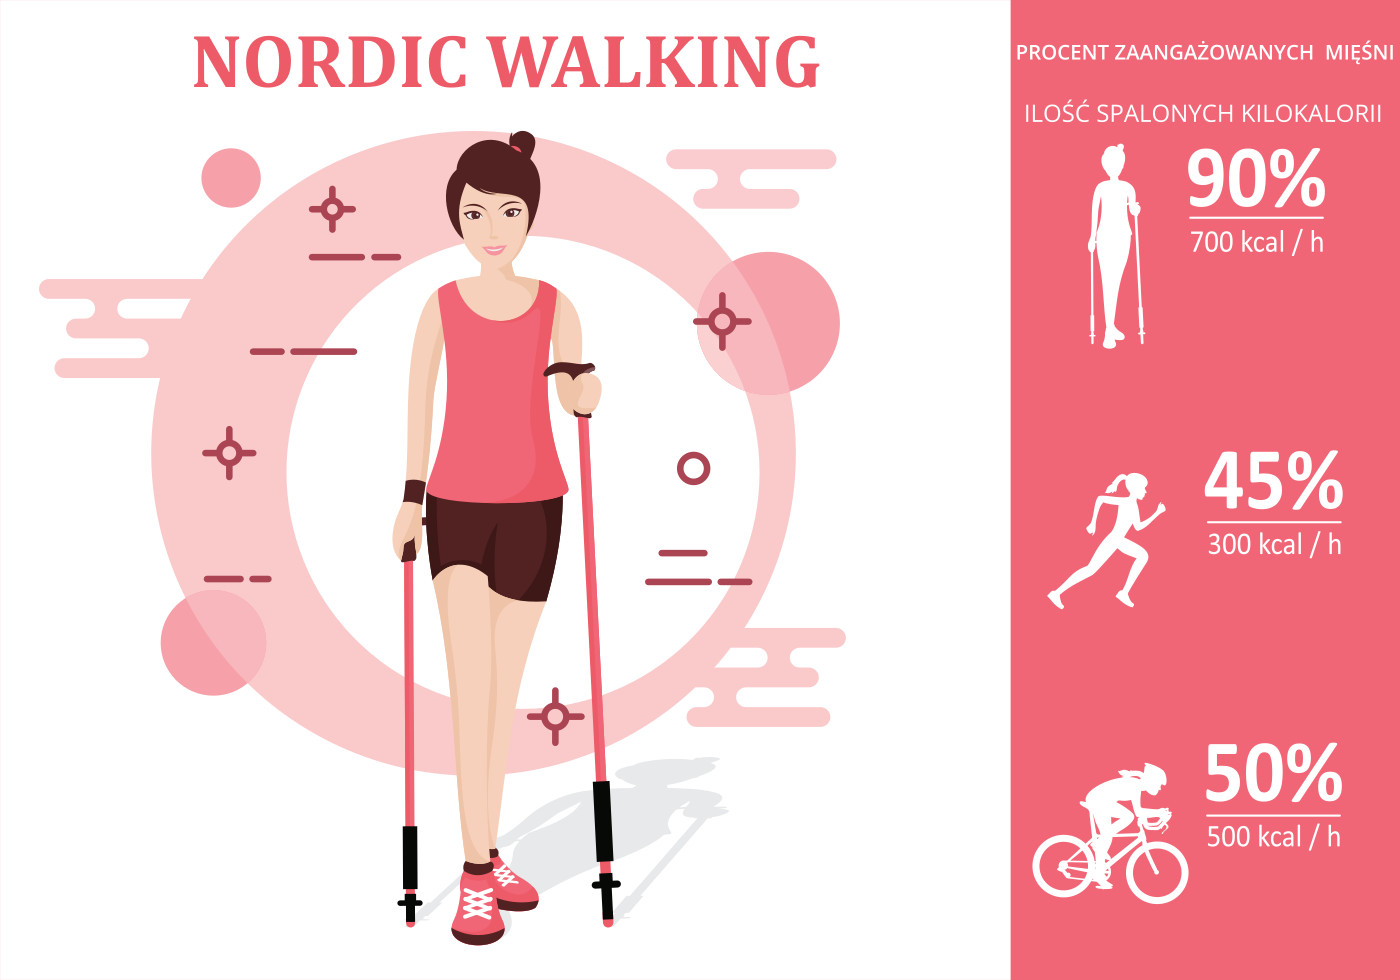 Mięśnie w Nordic Walking